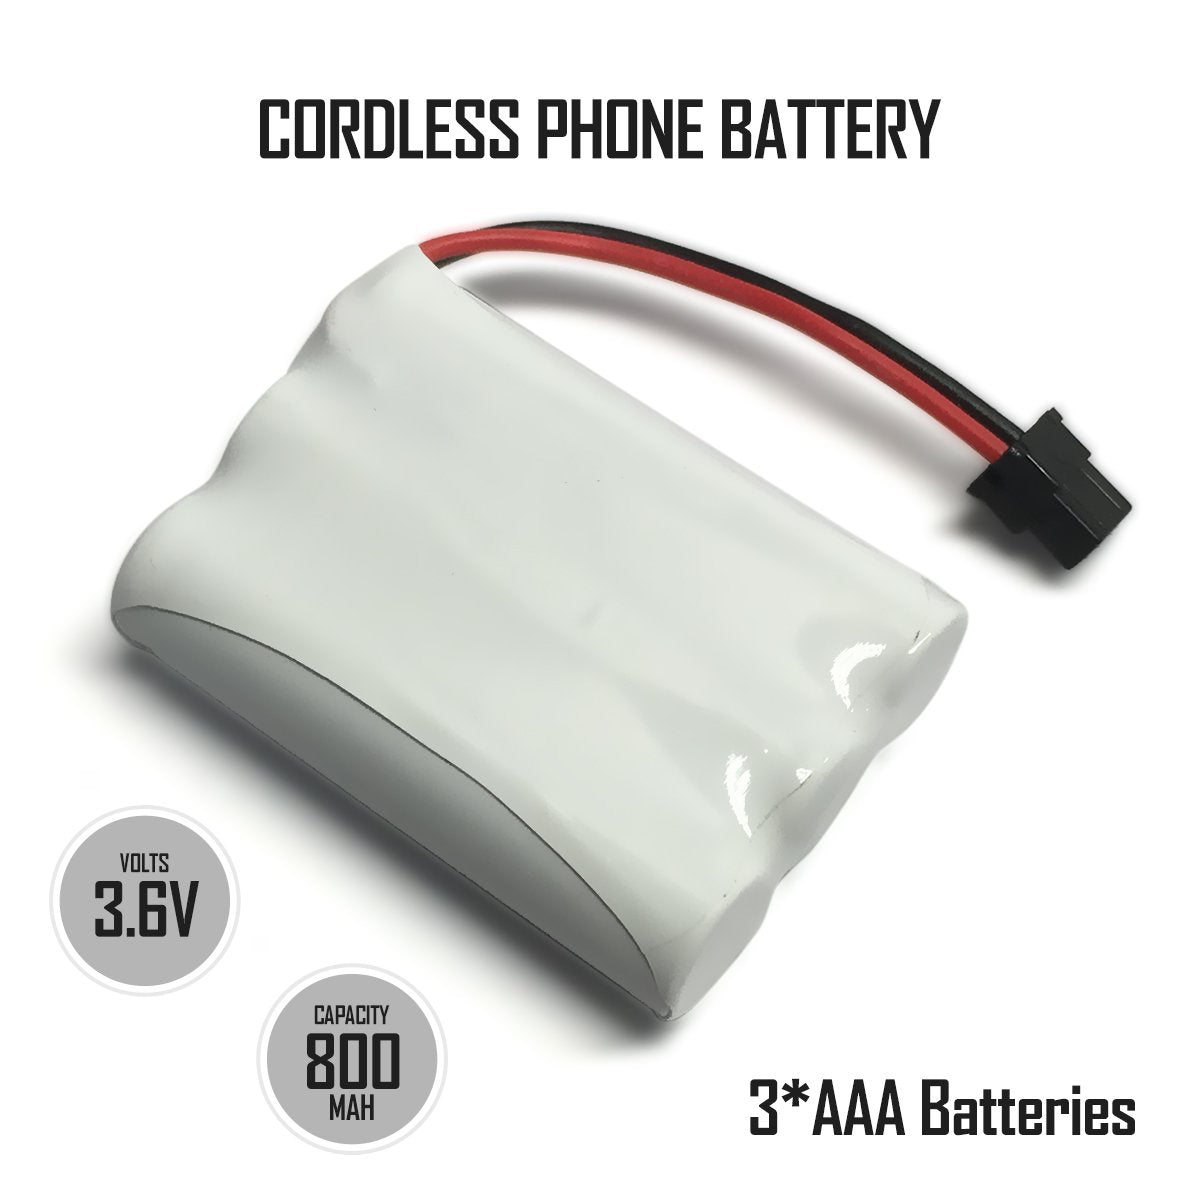 Uniden DCT750 Cordless Phone Battery